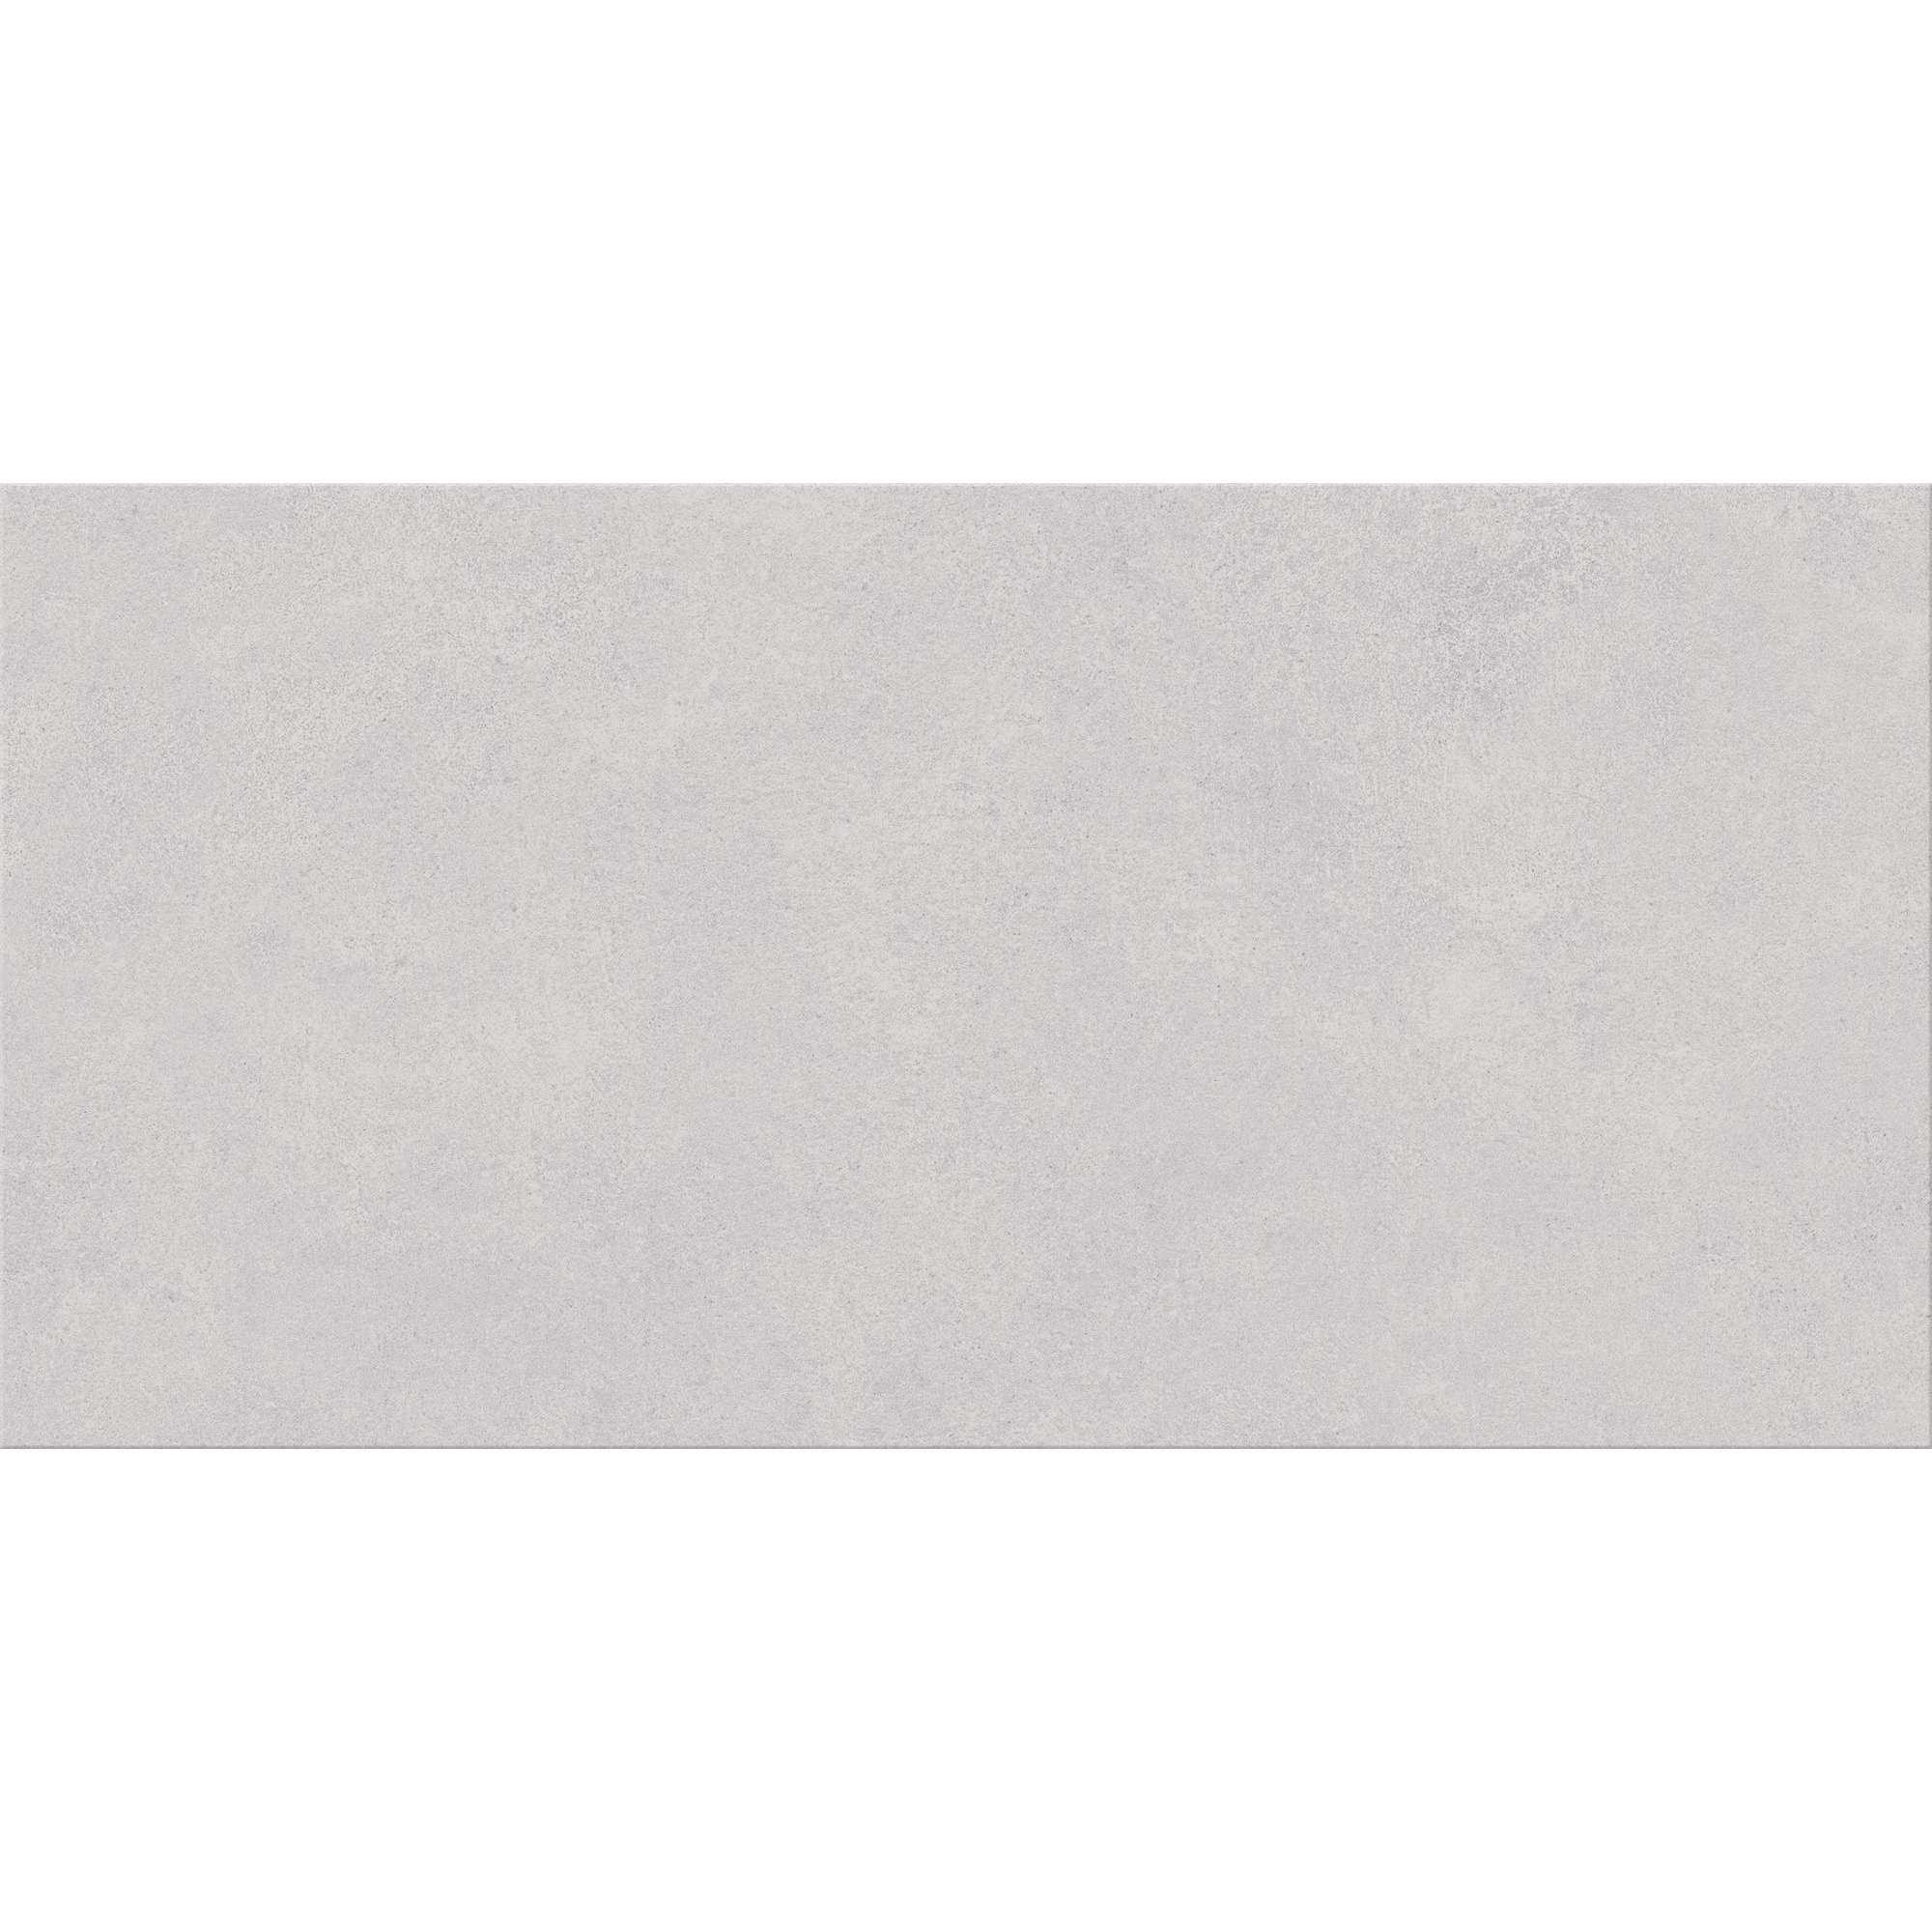 Wandfliese 'Vilma' Steingut grau glänzend 30 x 60 cm + product picture